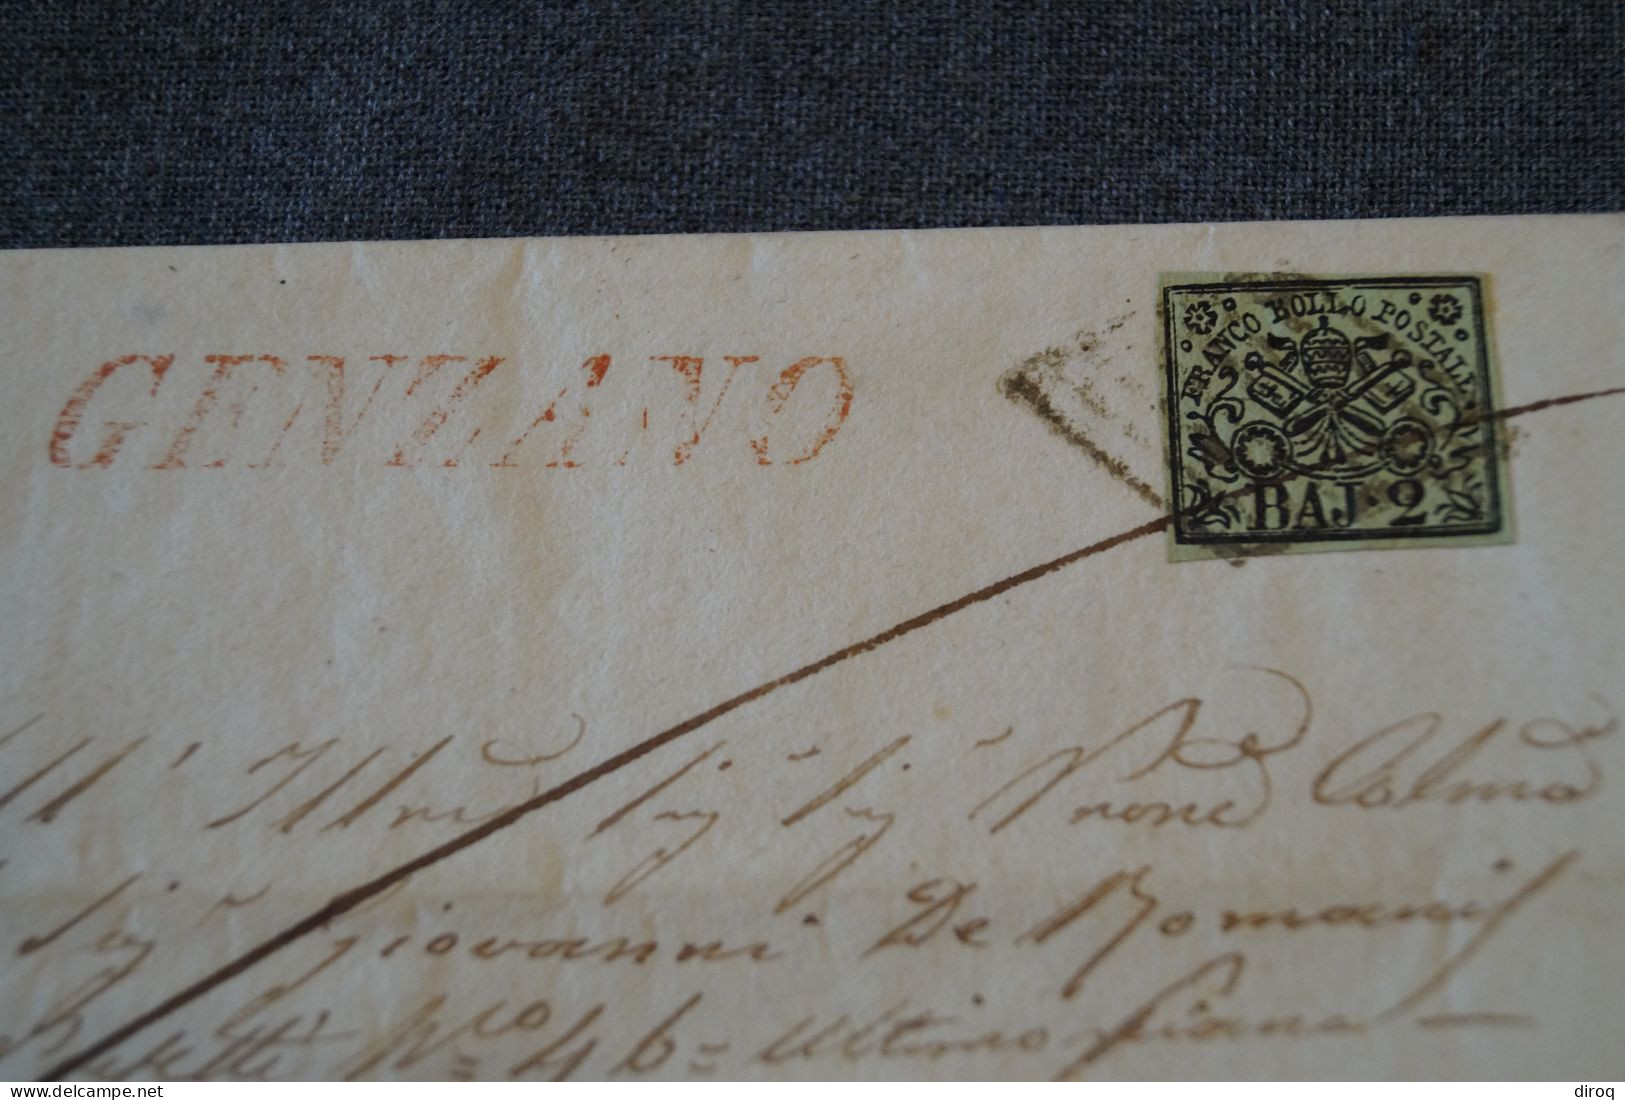 Ancien Envoi Franco Bollo Postale BAJ-2, Italia 1857,courrier à Identifier,pour Collection - Kerkelijke Staten